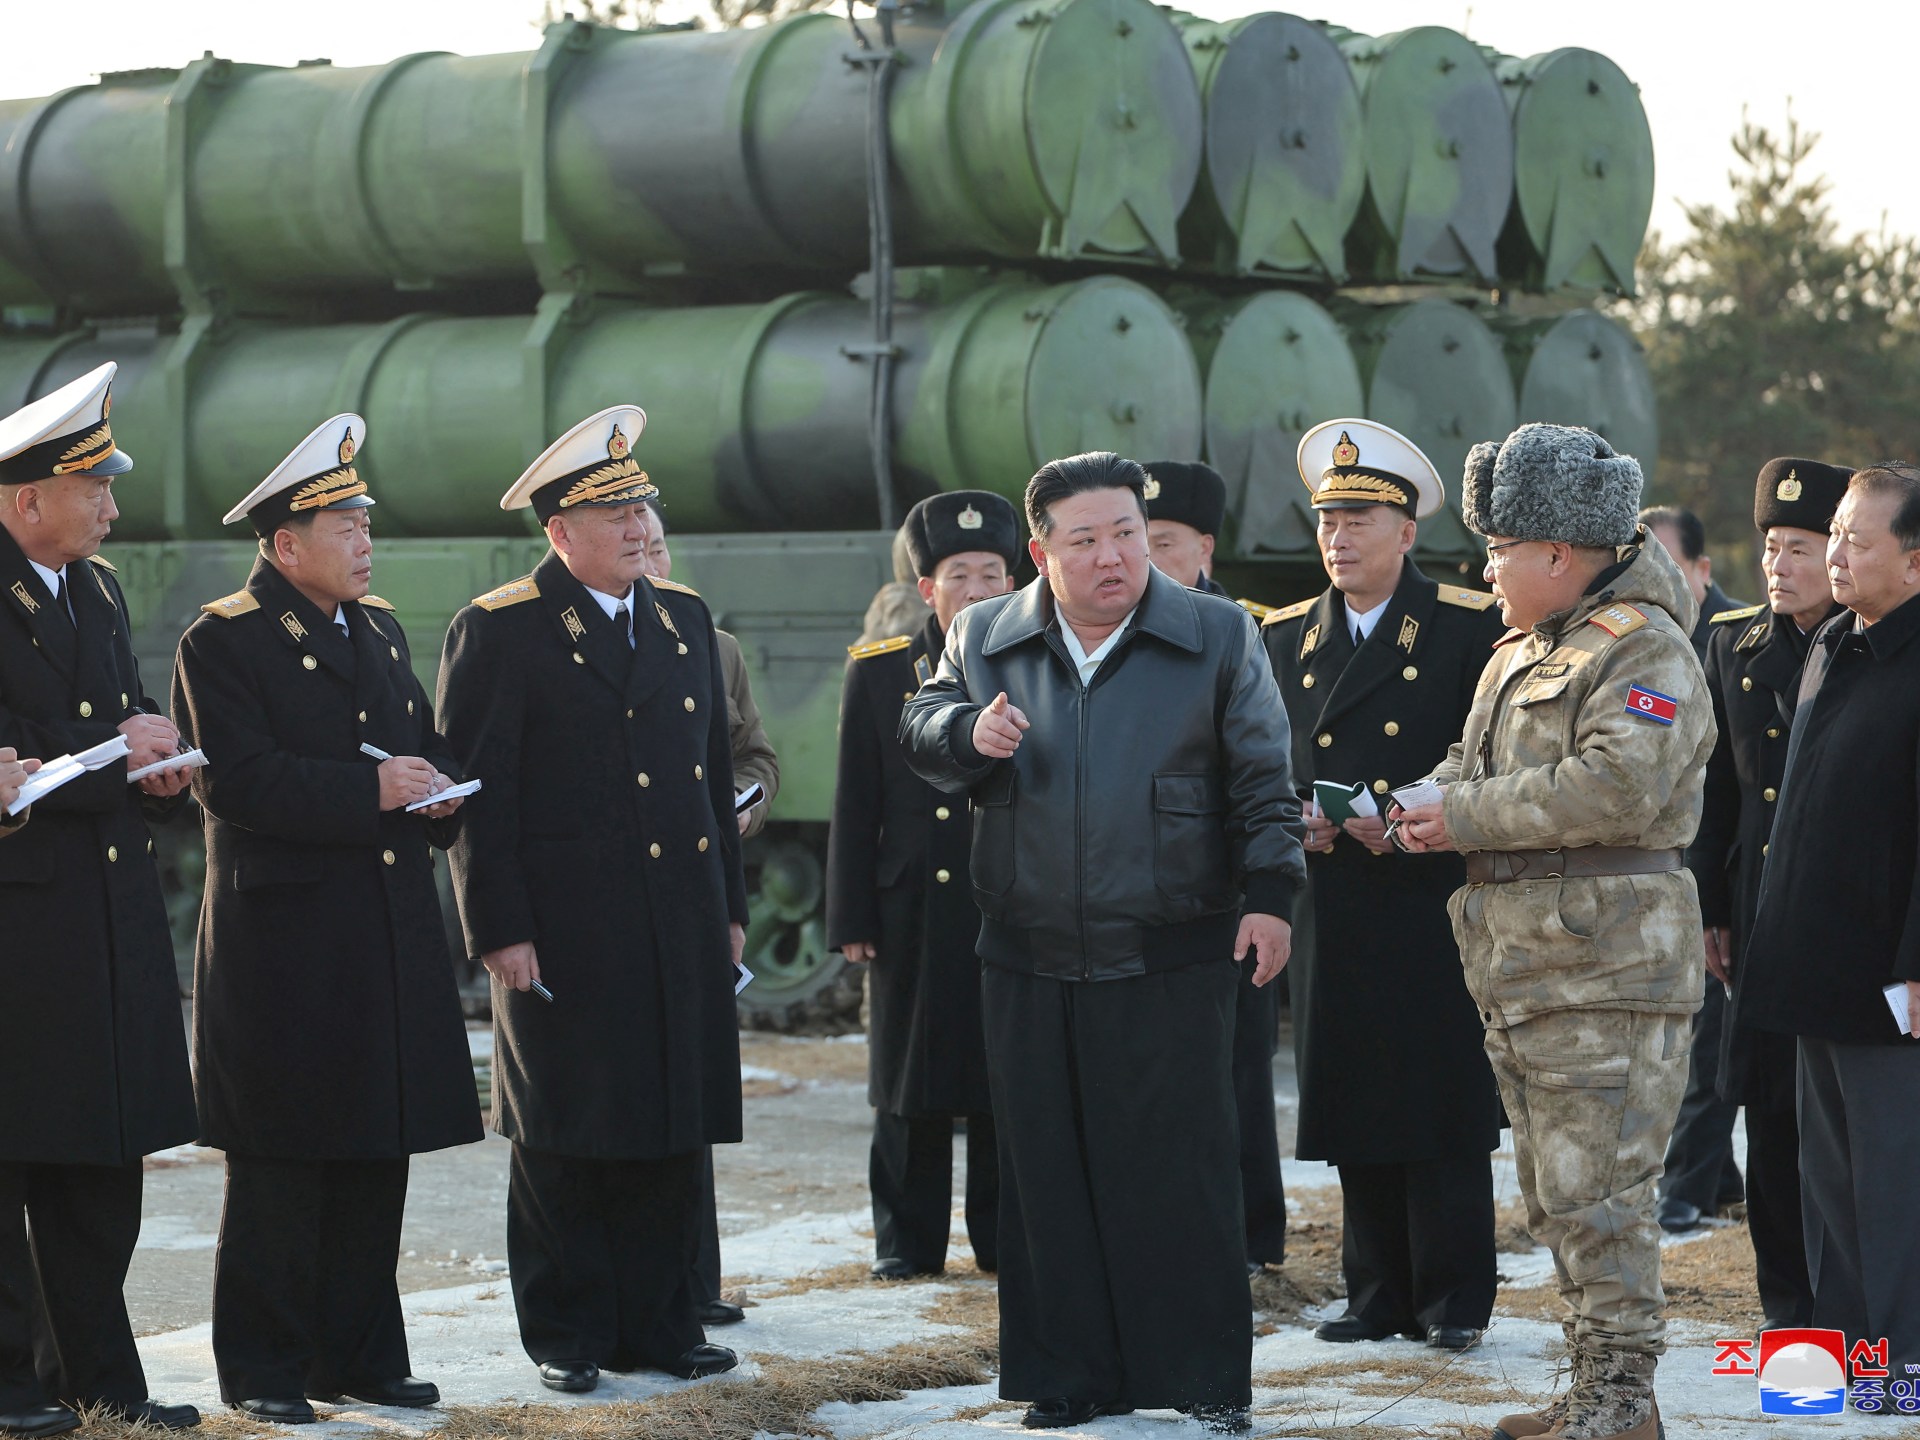 north korean missile launch